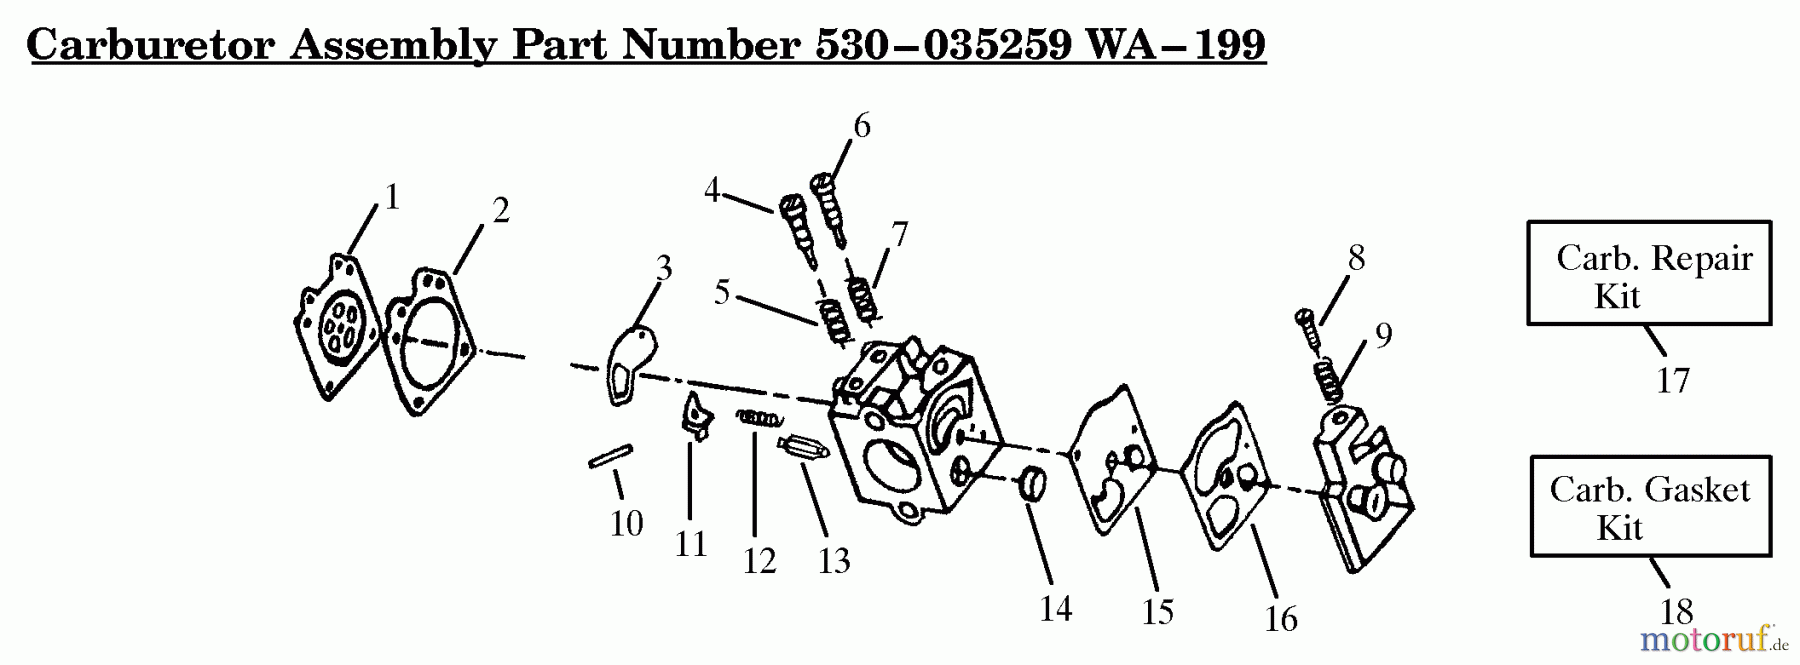  Poulan / Weed Eater Motorsensen, Trimmer HP22 - Weed Eater String Trimmer Carburetor Assembly (WA199) P/N 530035259